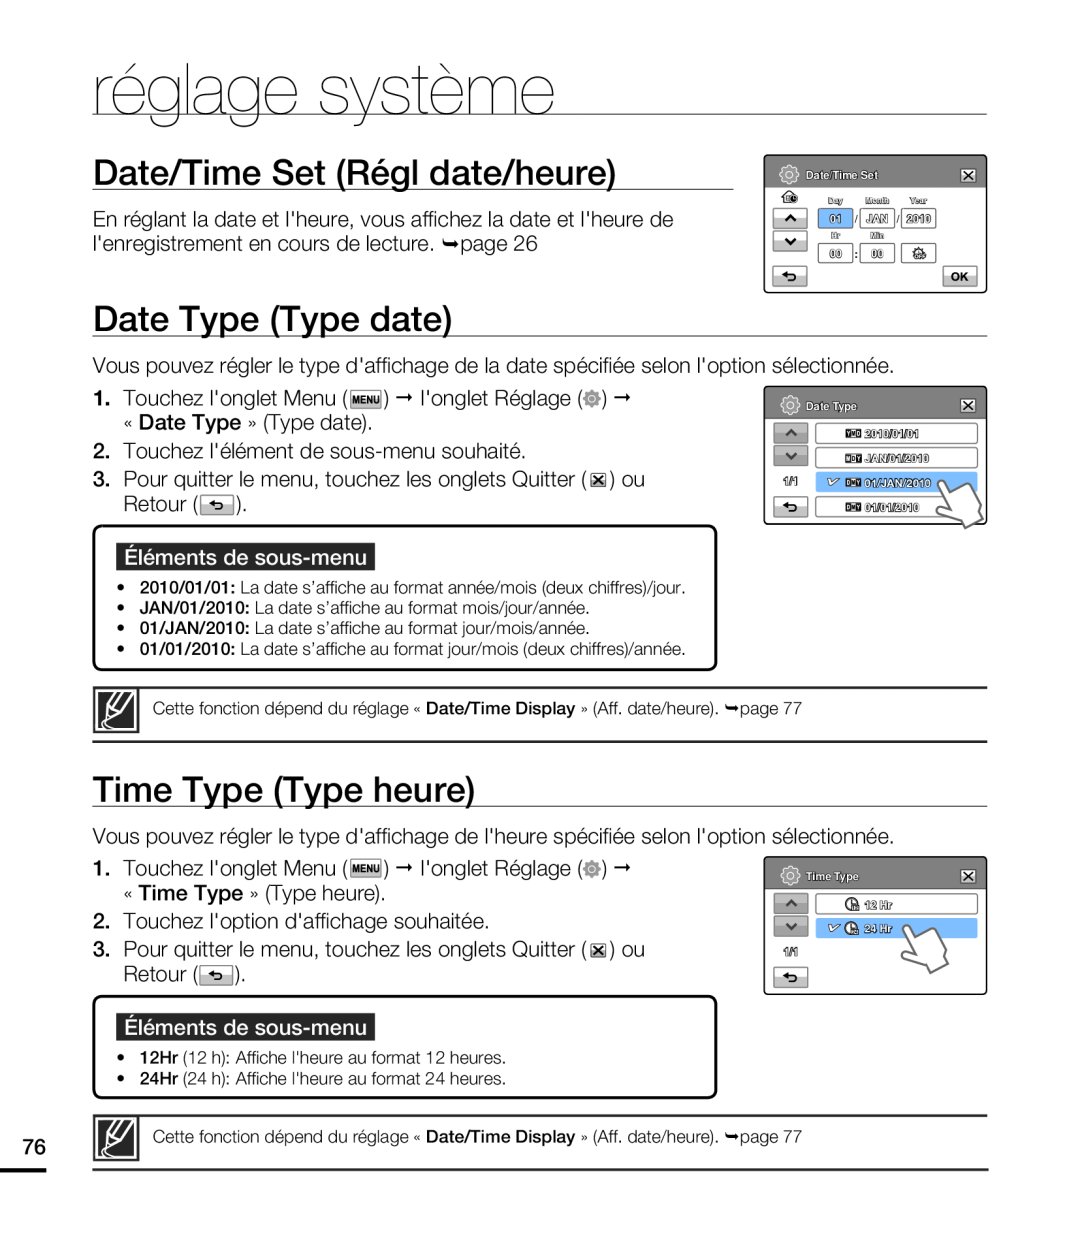 Samsung HMX-T10WP/XEU manual Date/Time Set Régl date/heure, Date Type Type date, Time Type Type heure, réglage système 